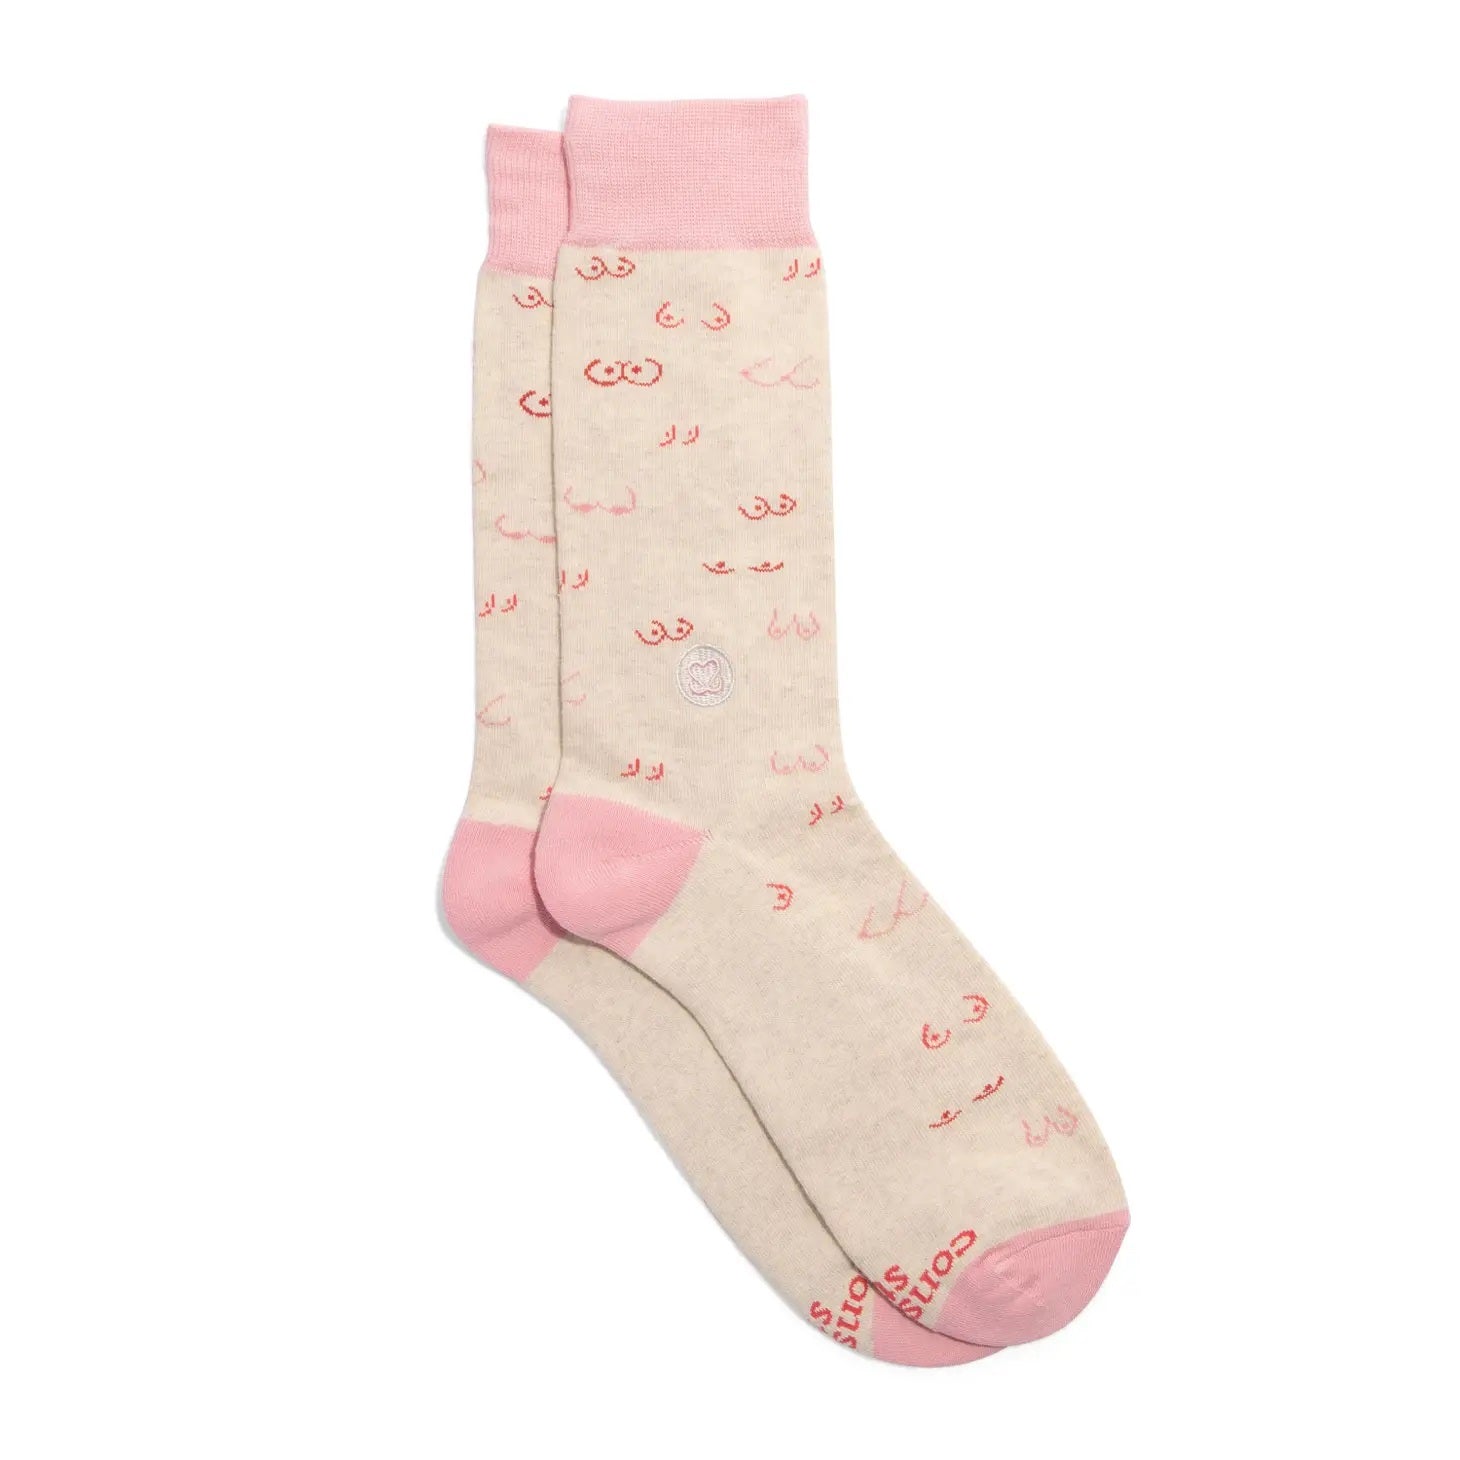 Conscious Step, Socks that Support Self-Checks - Boobies - Boutique Dandelion